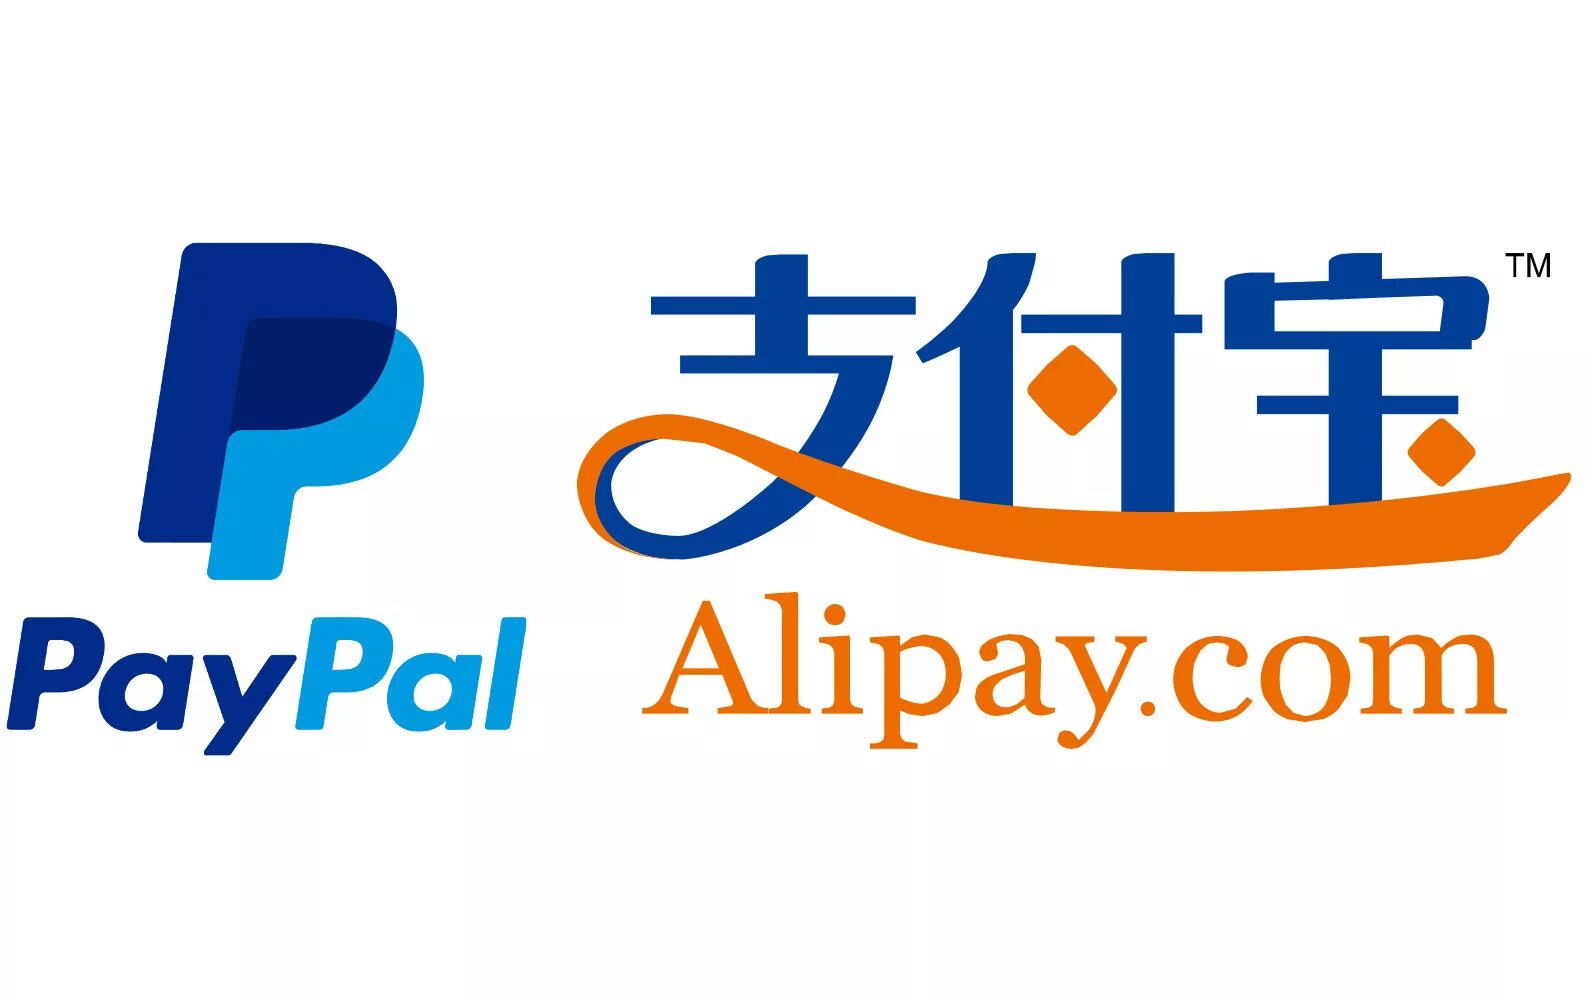 Alipay com. Alipay. Alipay в России. Китайский ПЭЙПАЙ. Алипей табличка.